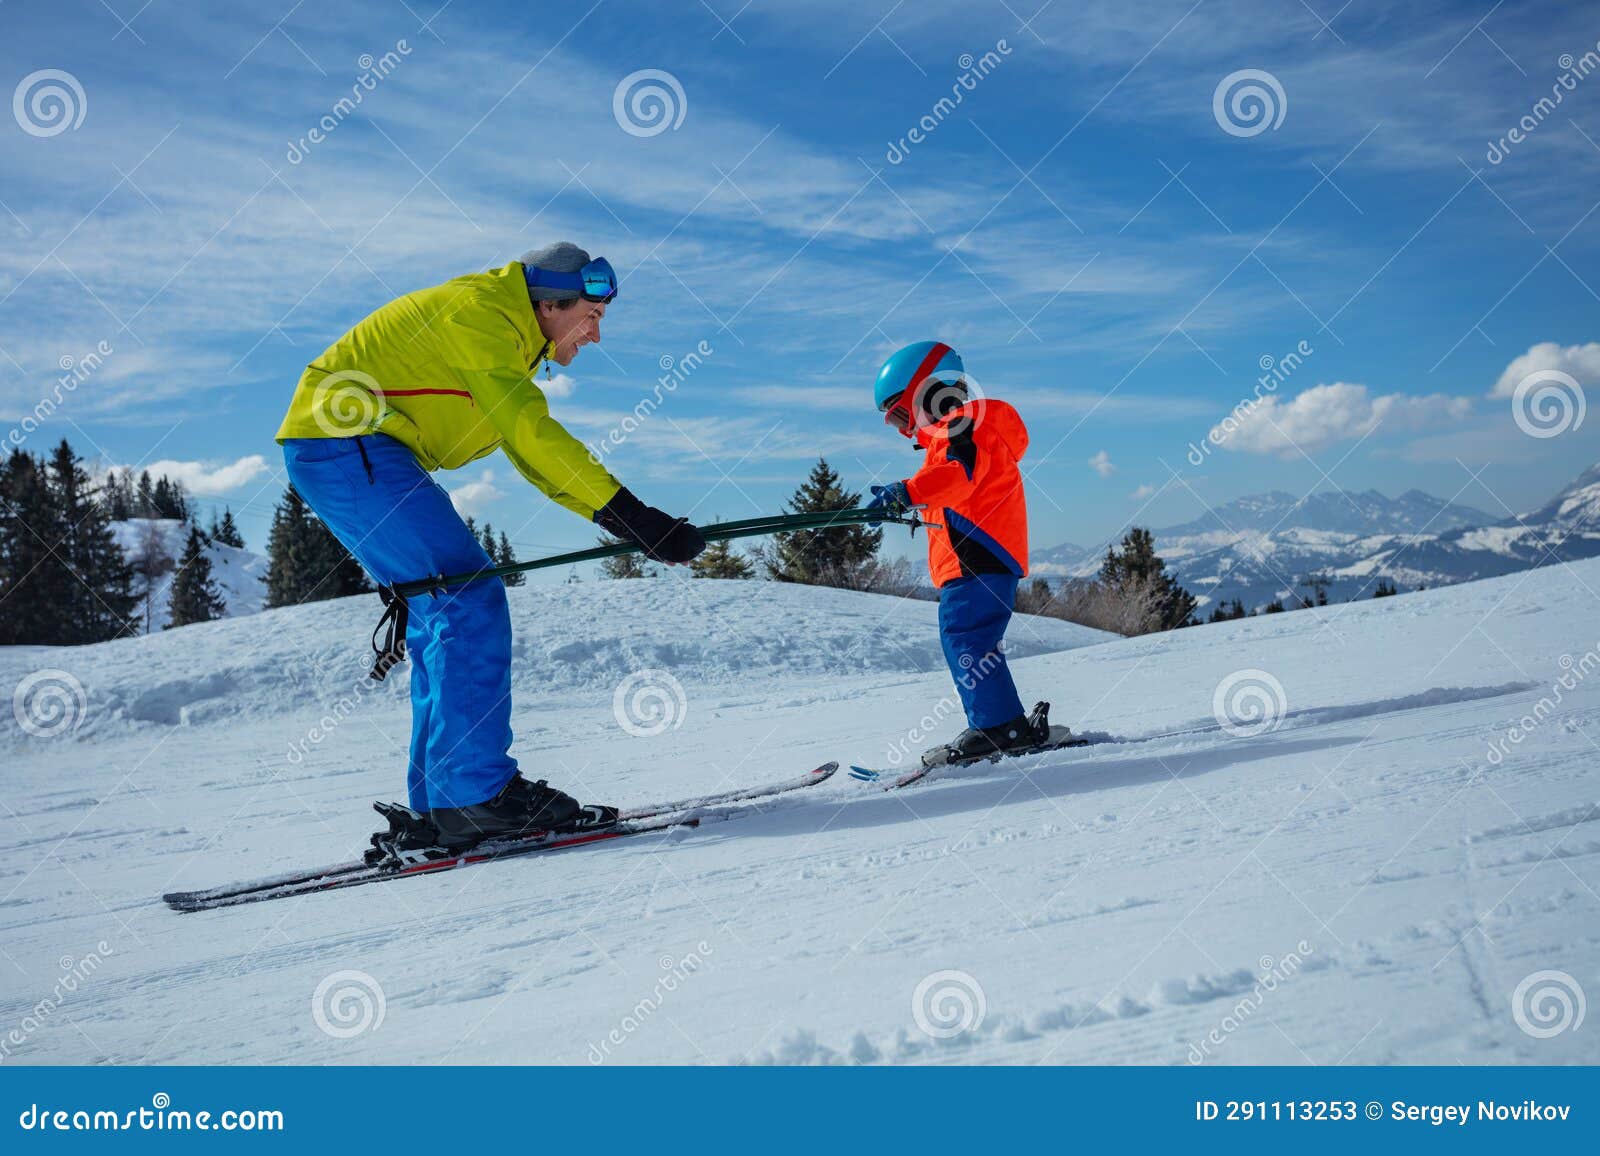 instructor in skiing school glide backwards teach child to ski